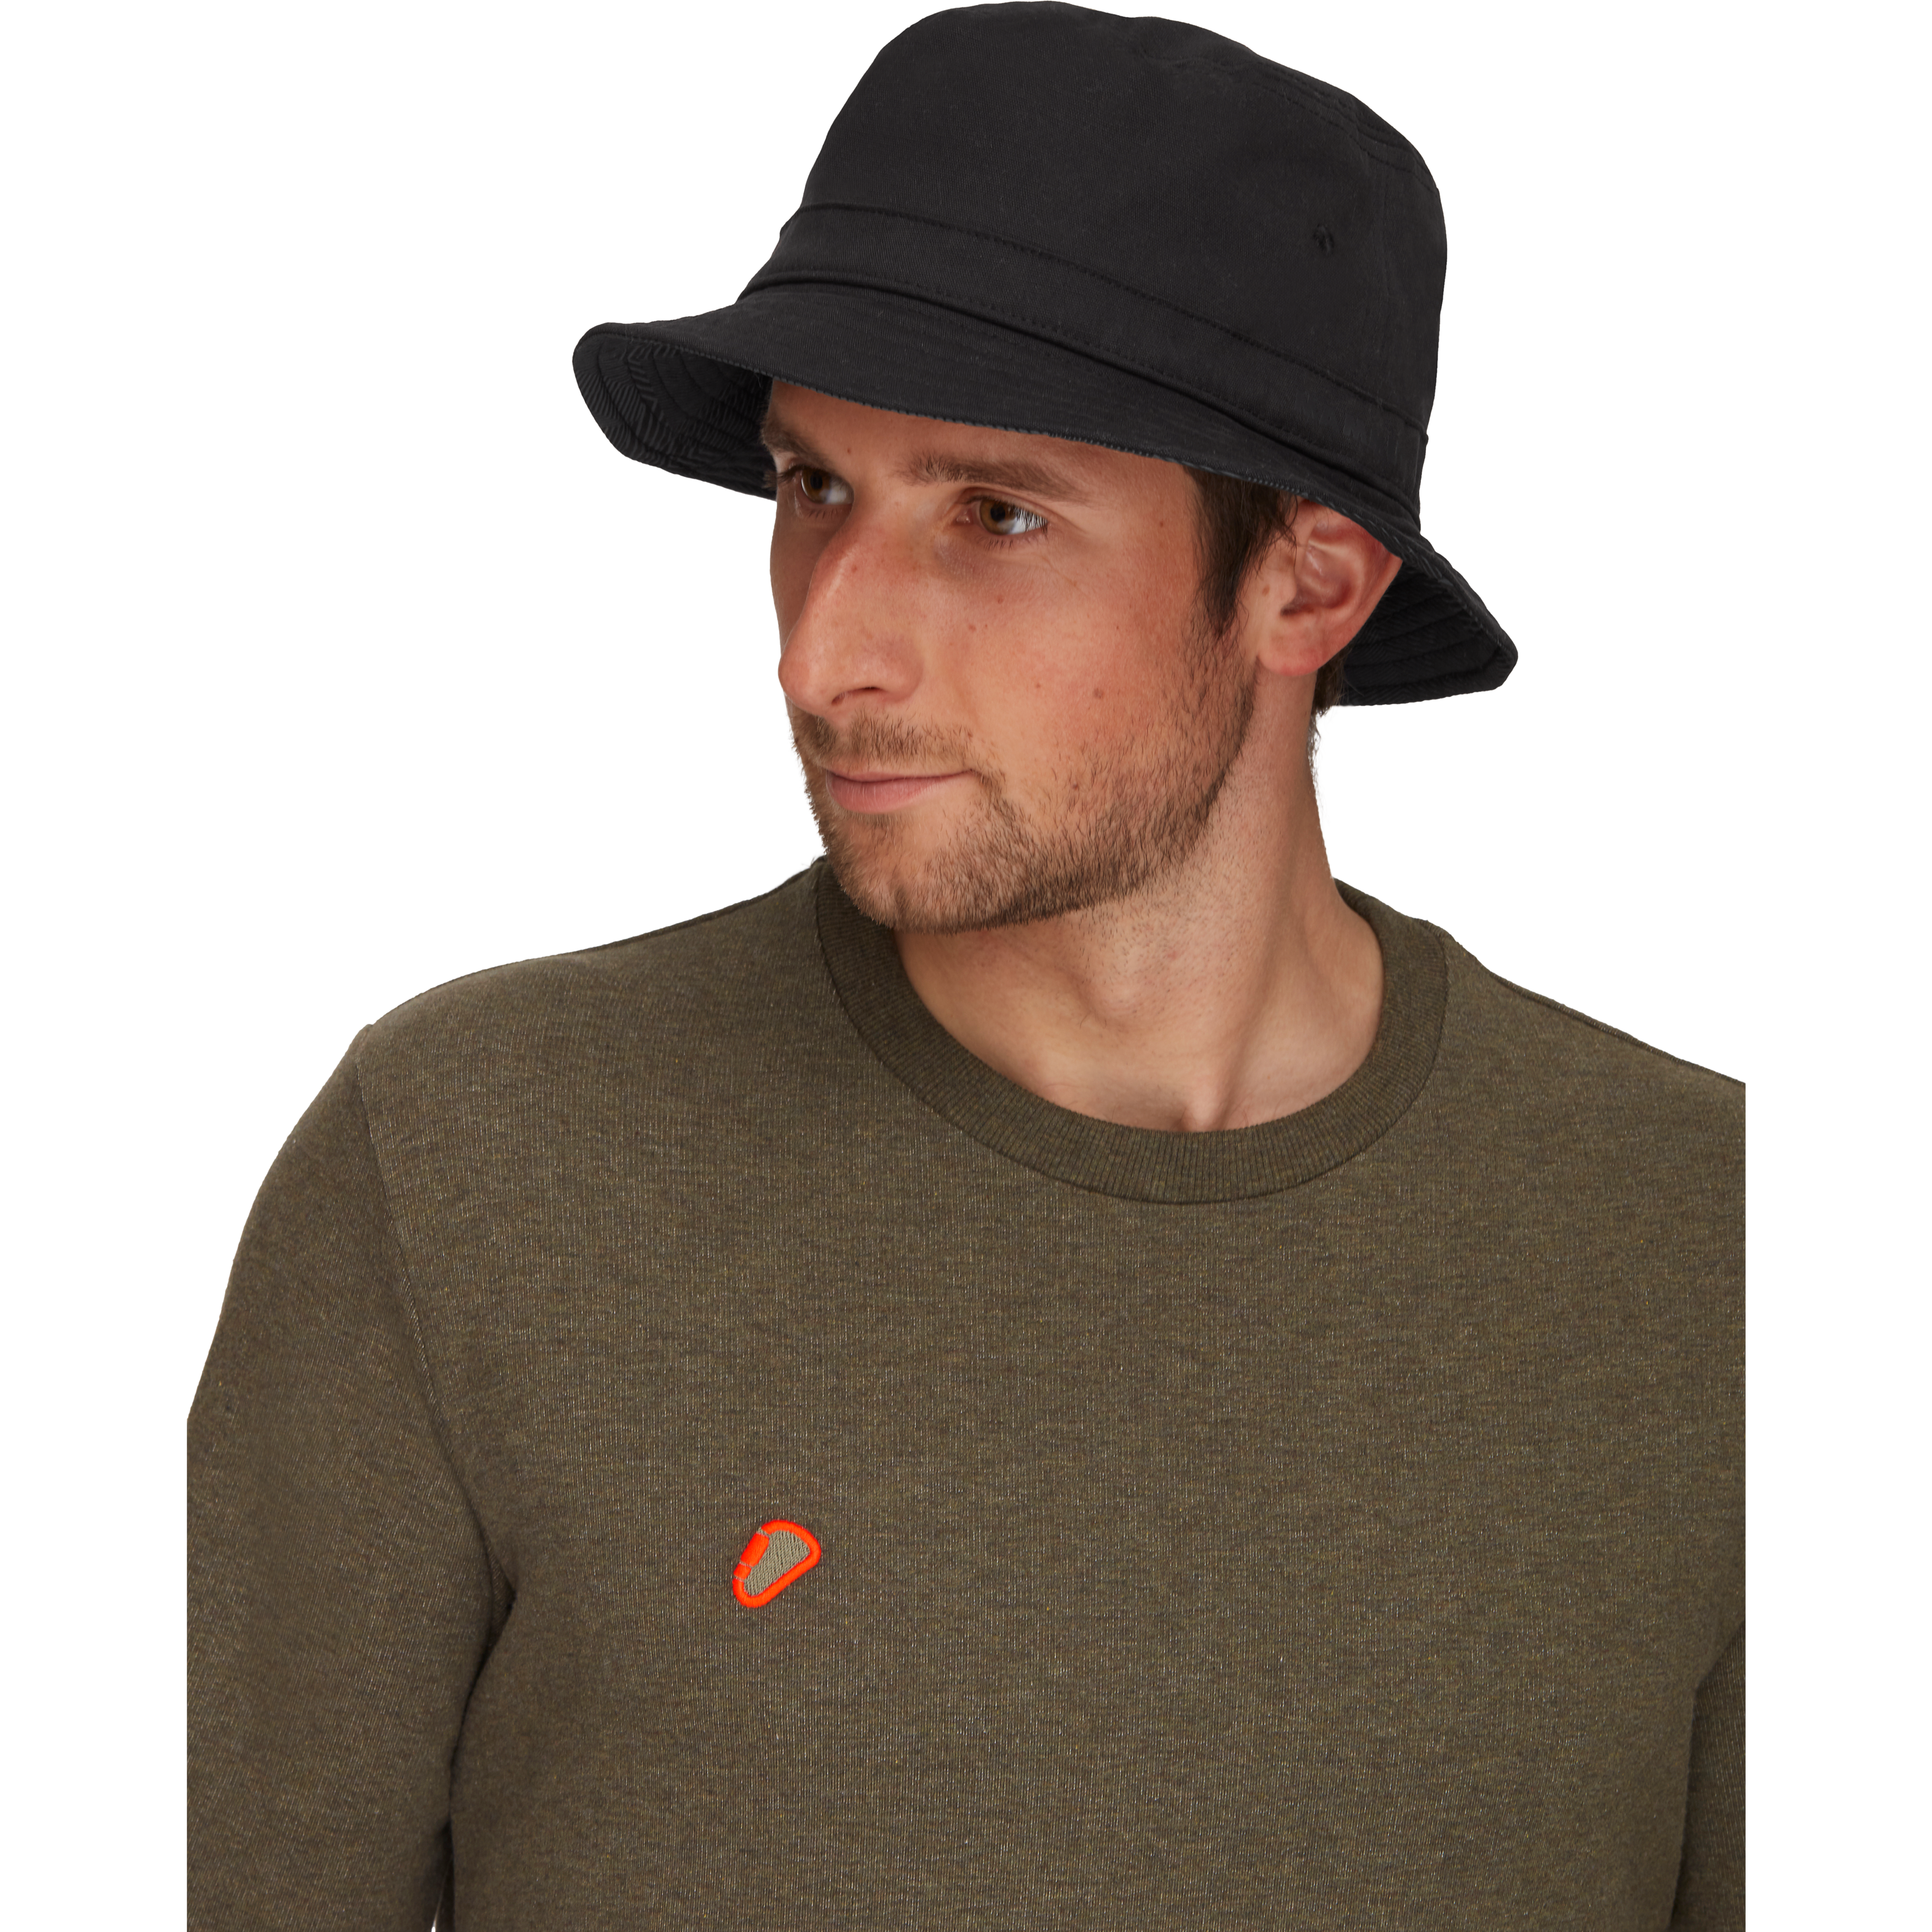 Mammut Bucket Hat product image